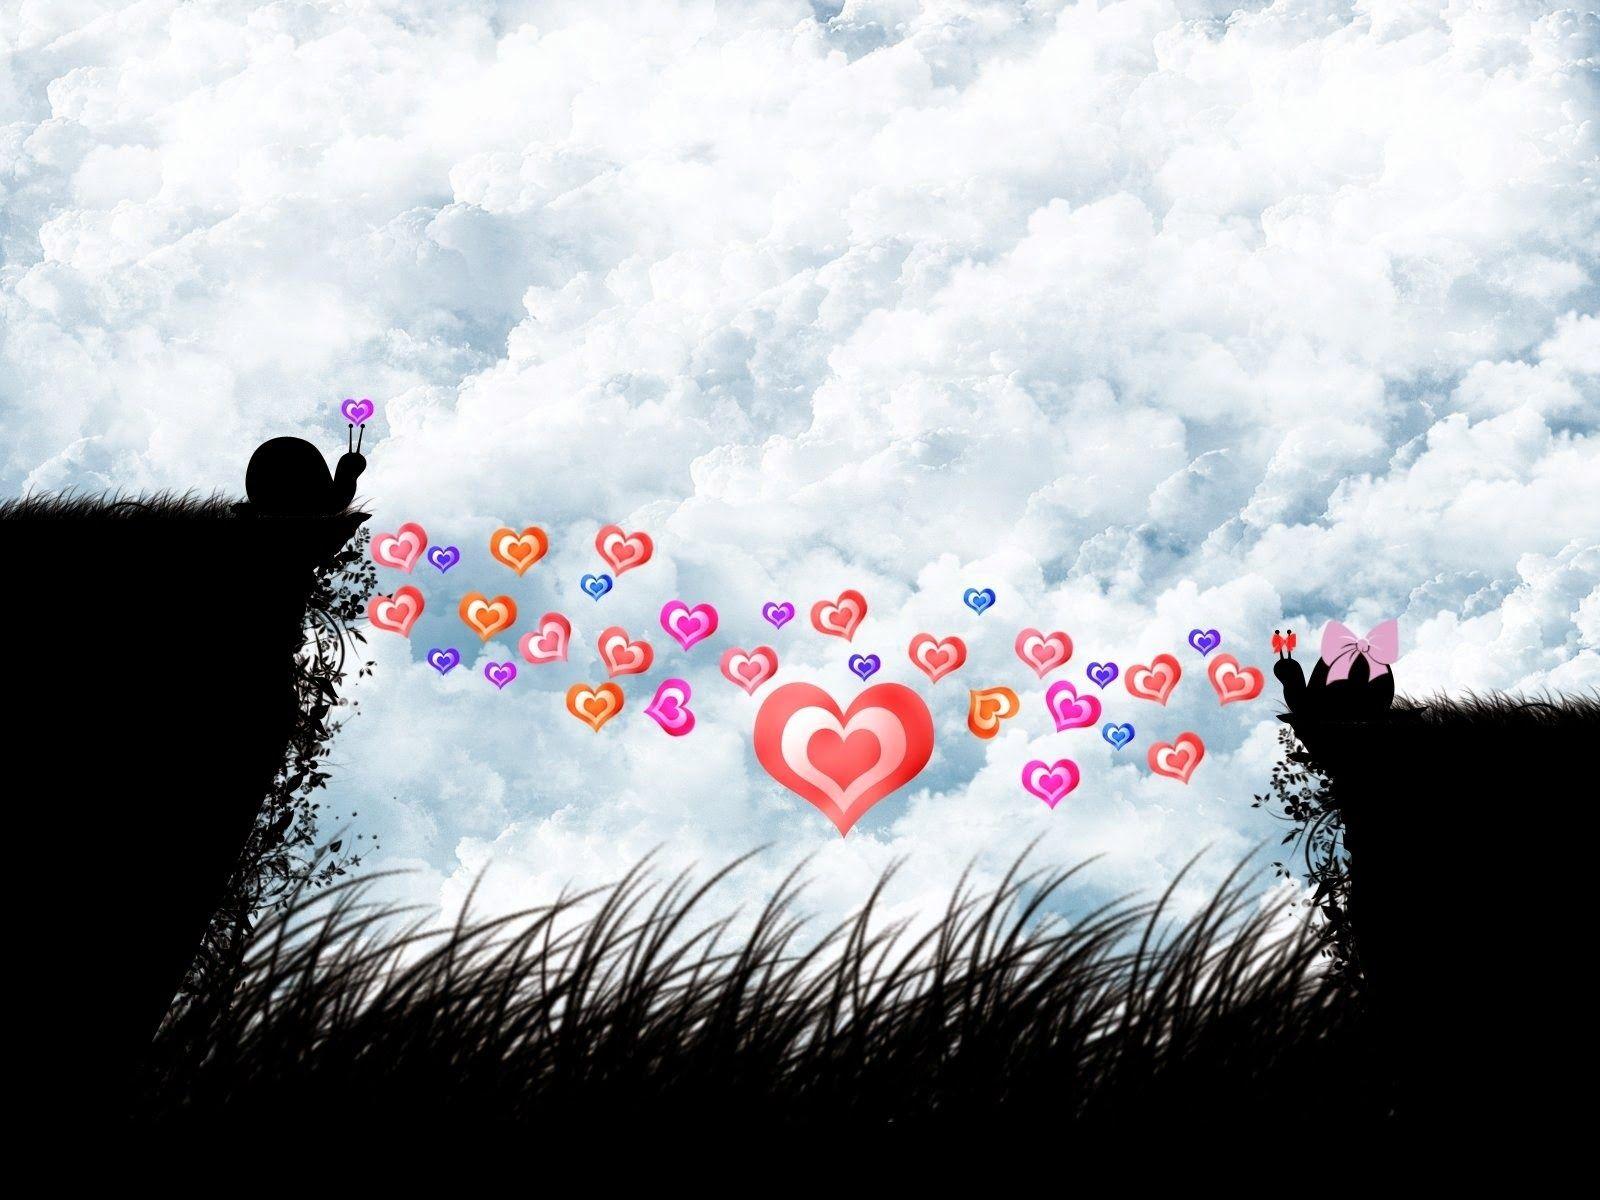 V.32 Best Love Wallpaper Love Image for mobile and desktop